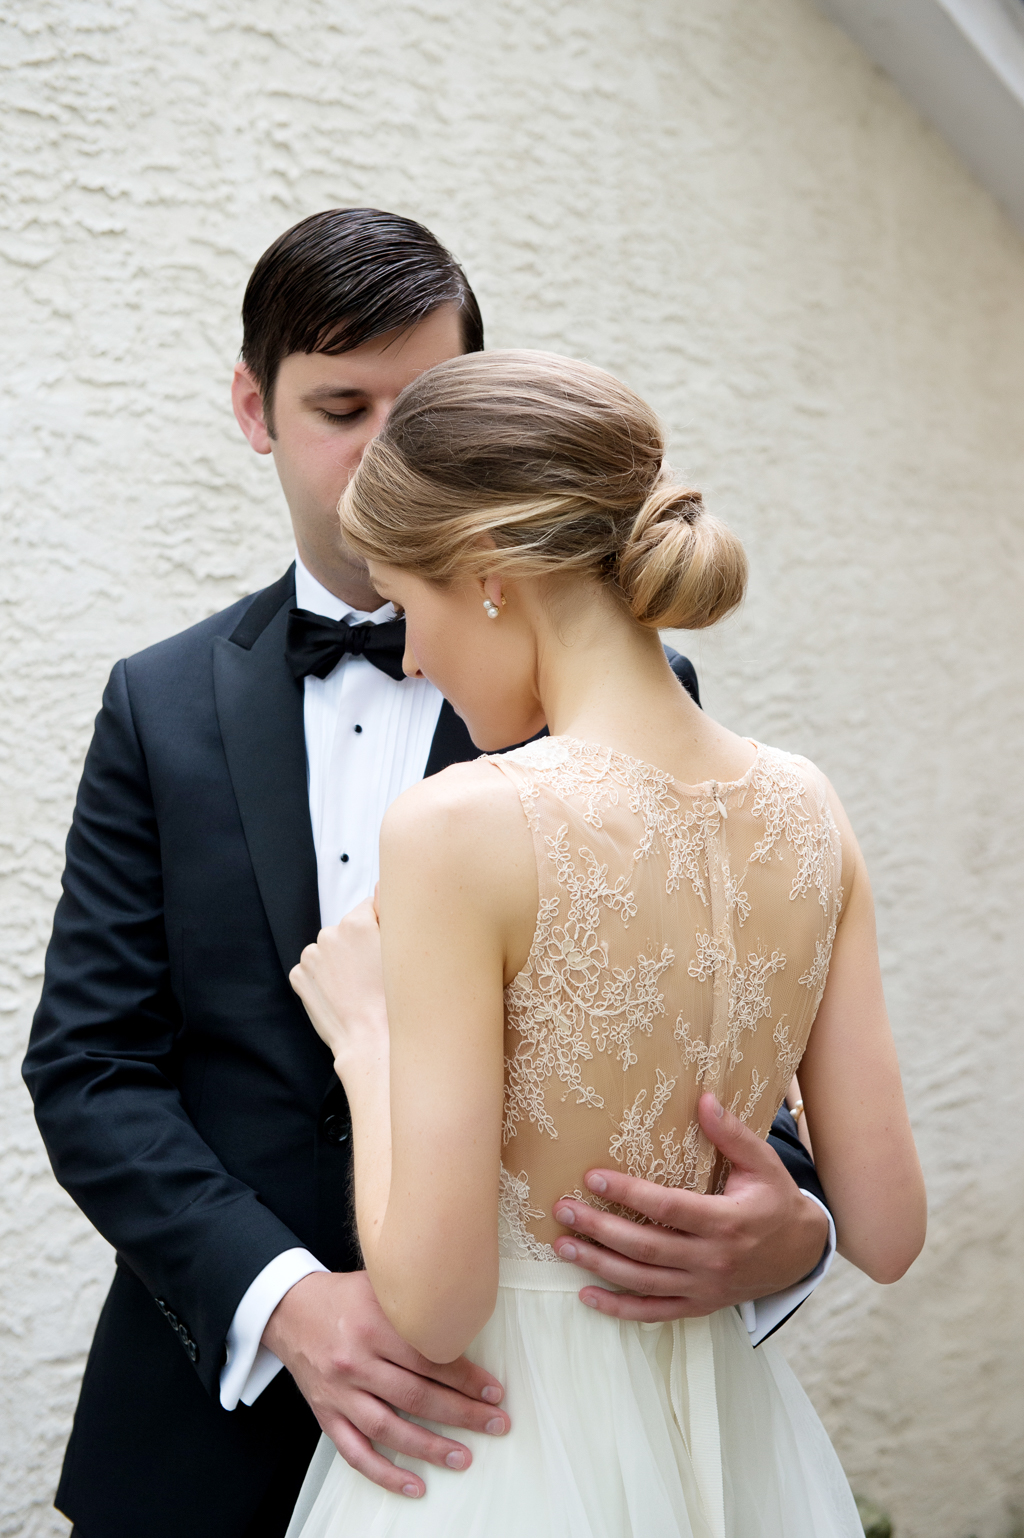 beautiful lace back wedding dress and hair in bun